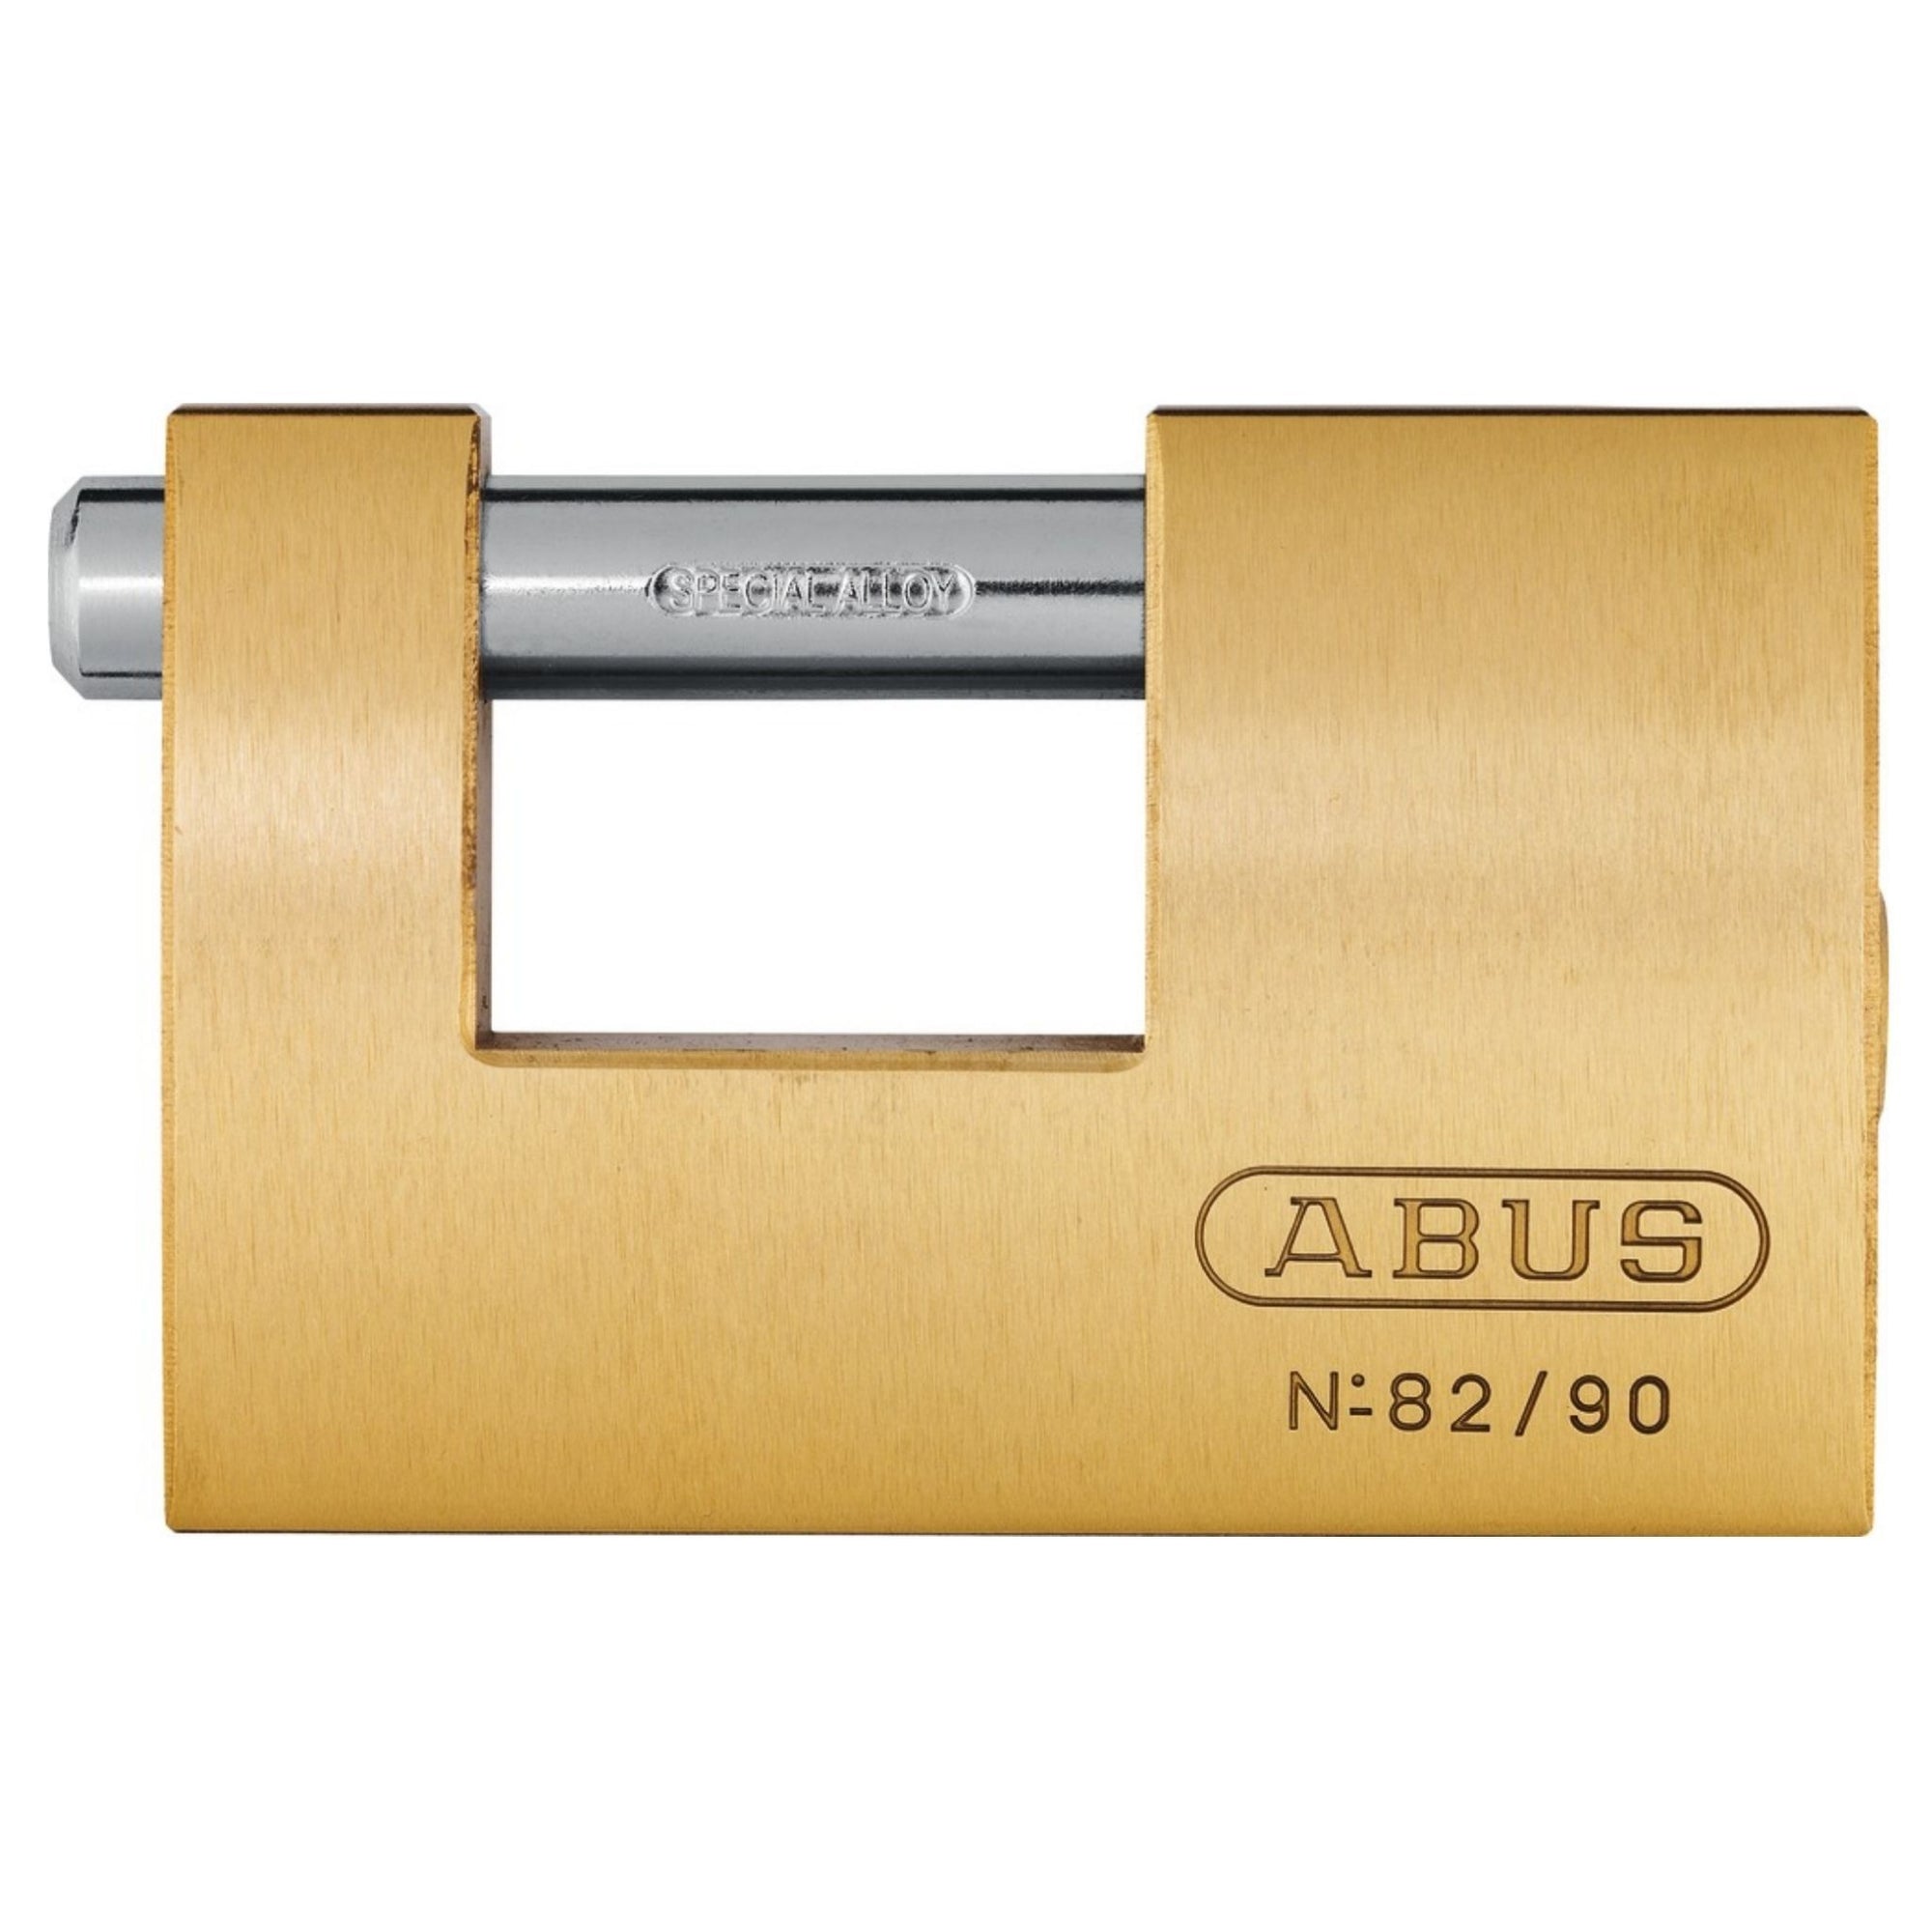 Abus 82/90 KA 8523 Monoblock Lock Brass Mono Padlock Keyed Alike to Match Existing Key# 8523 - The Lock Source